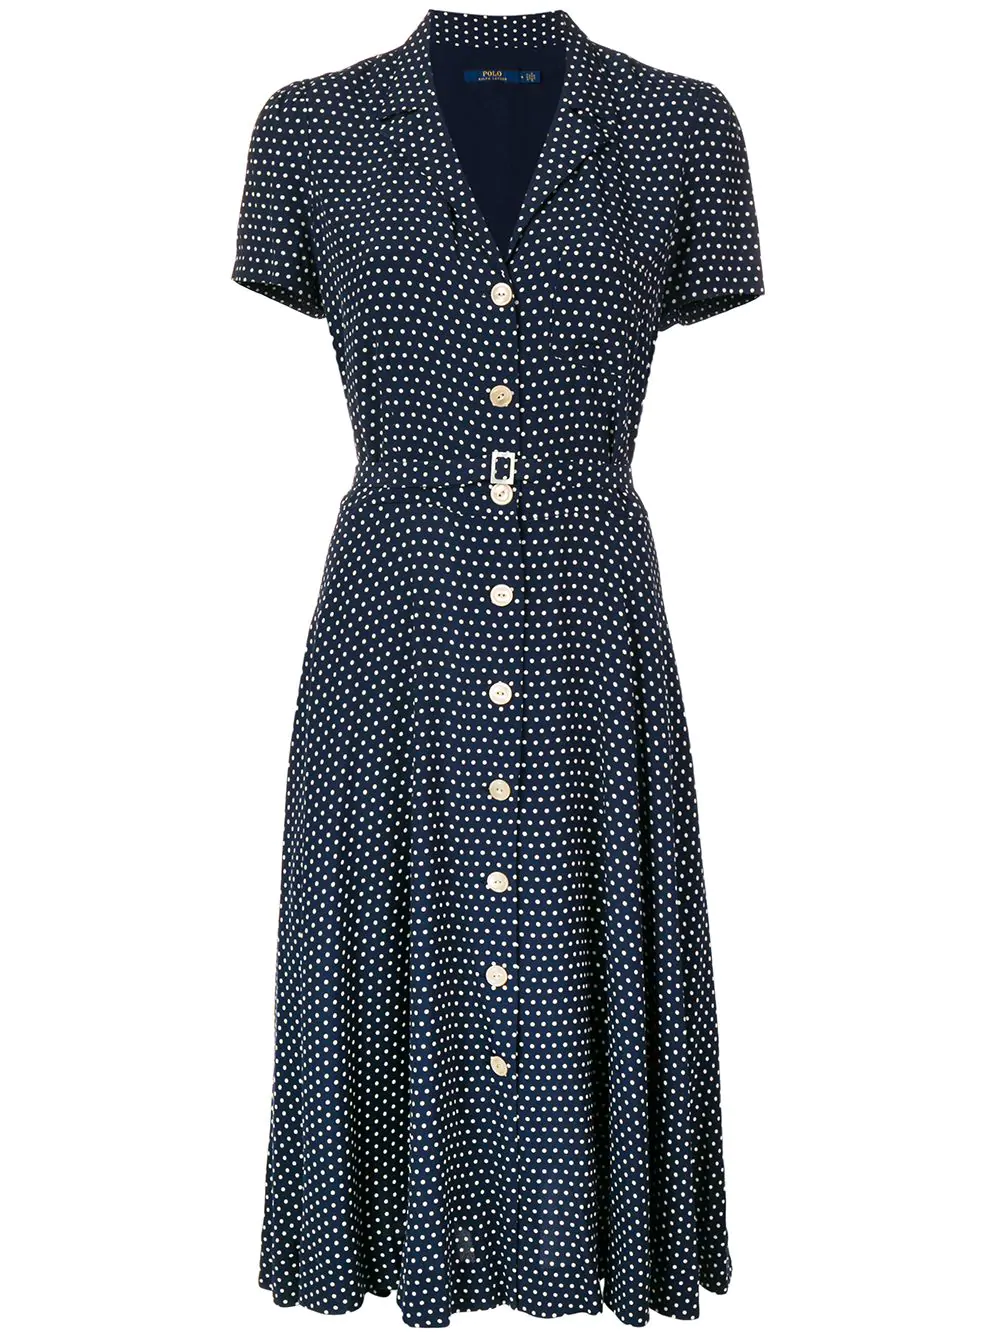 Polo Ralph Lauren Polka Dot Print Dress - Blue | ModeSens